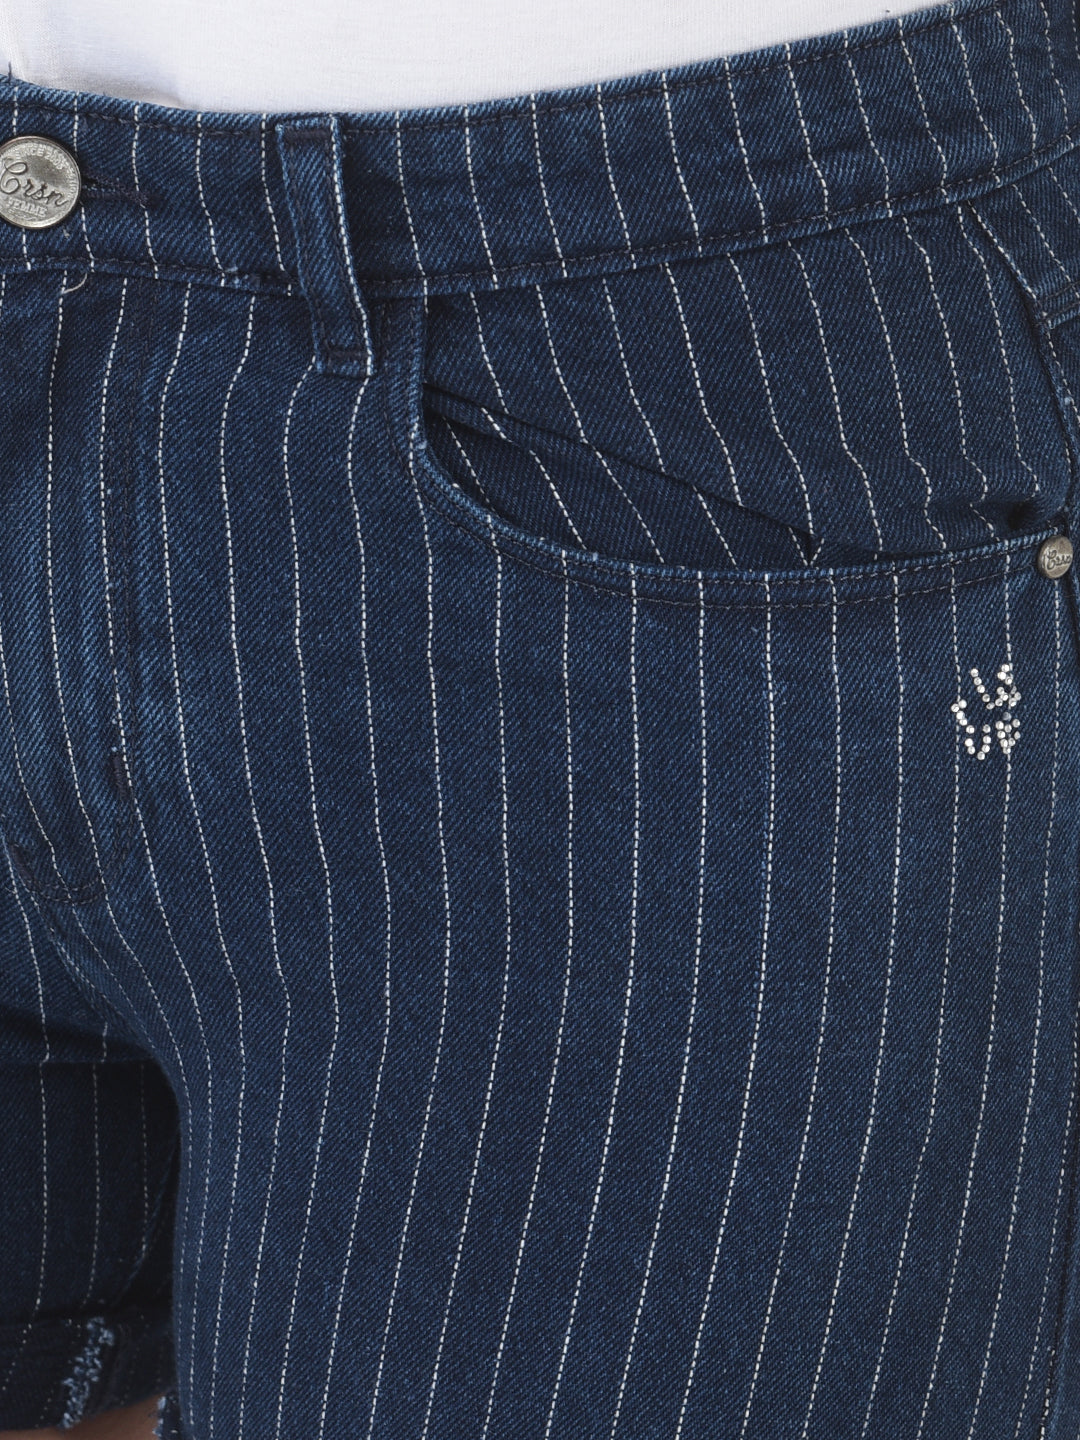 Navy Blue Striped Shorts - Women Shorts